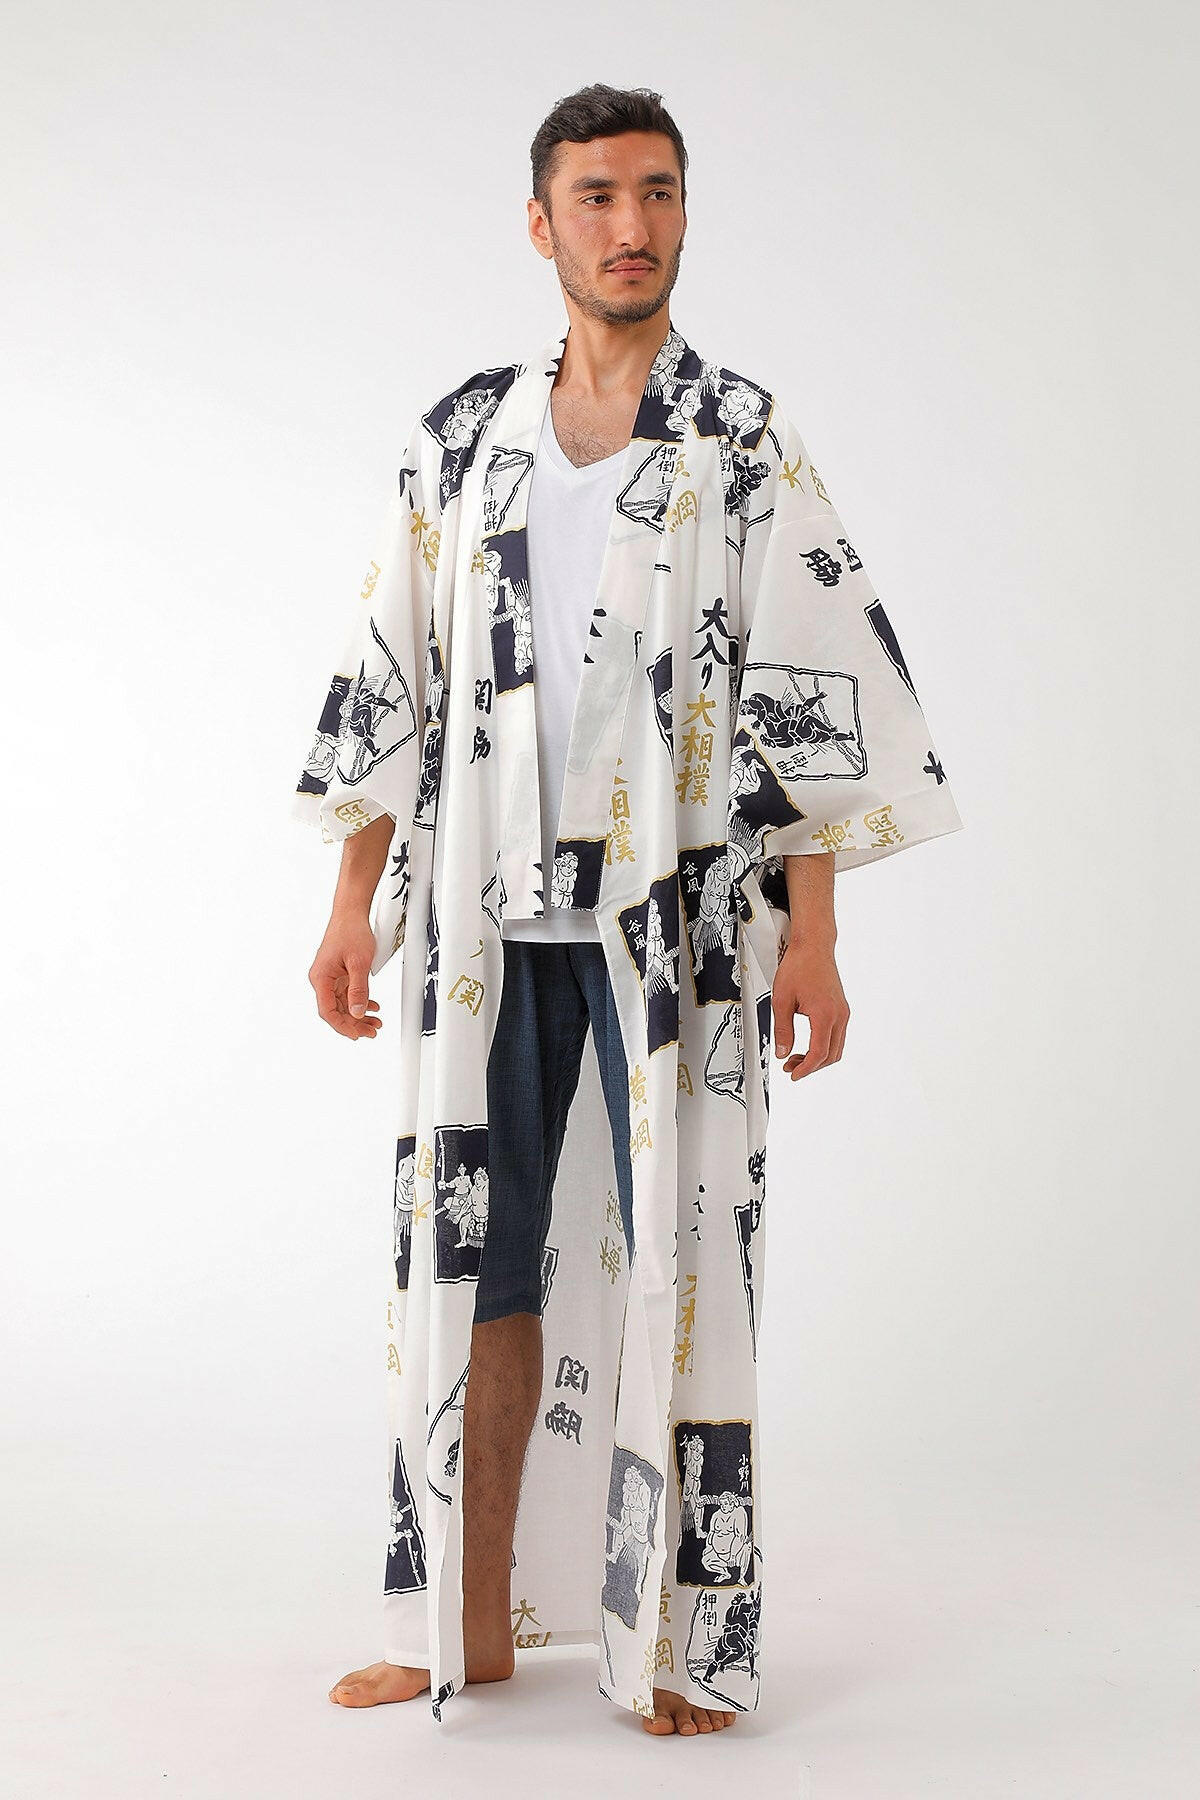 Men SUMO Wrestler Cotton Yukata Kimono Color White Model Front No Belt View